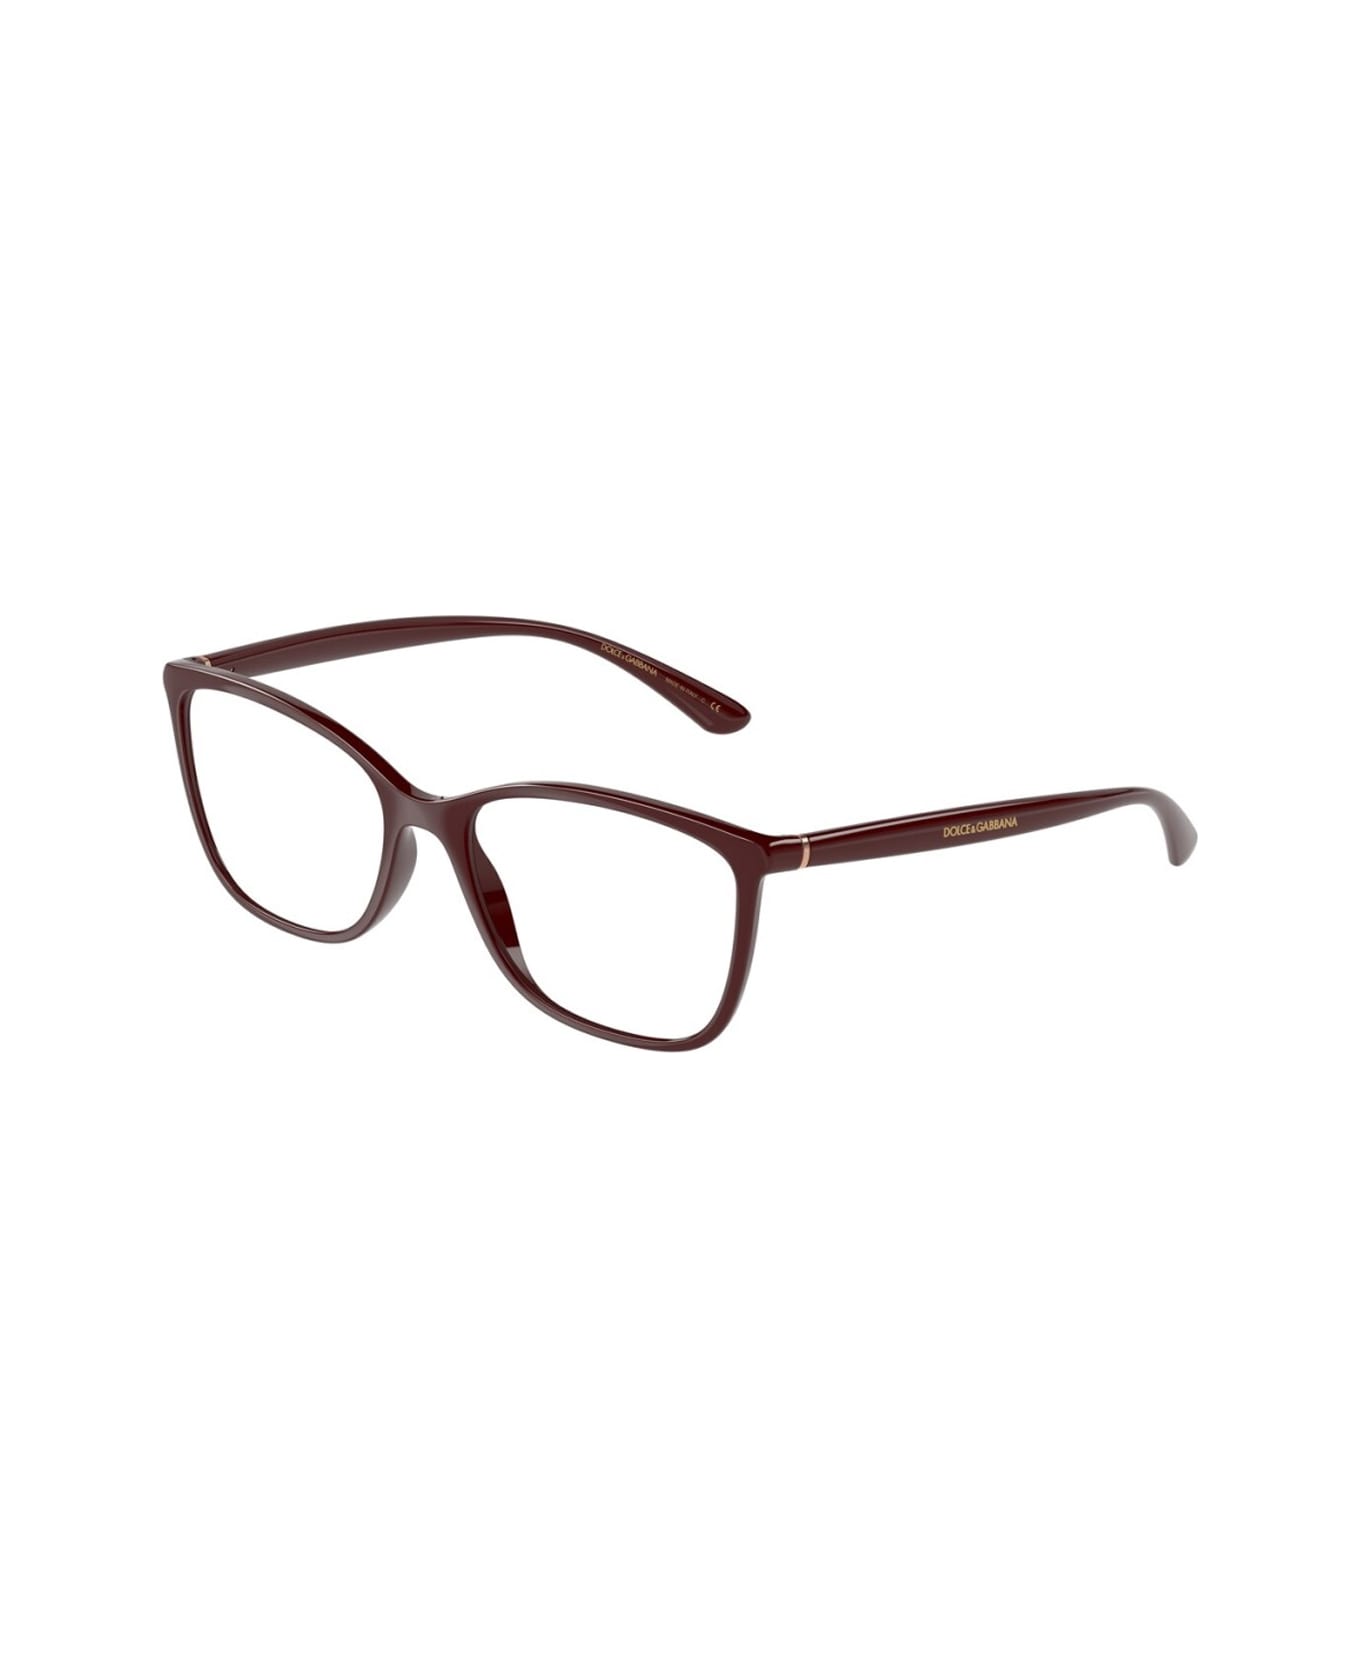 Dolce & Gabbana Eyewear Dg5026 3247 Glasses - Rosso アイウェア